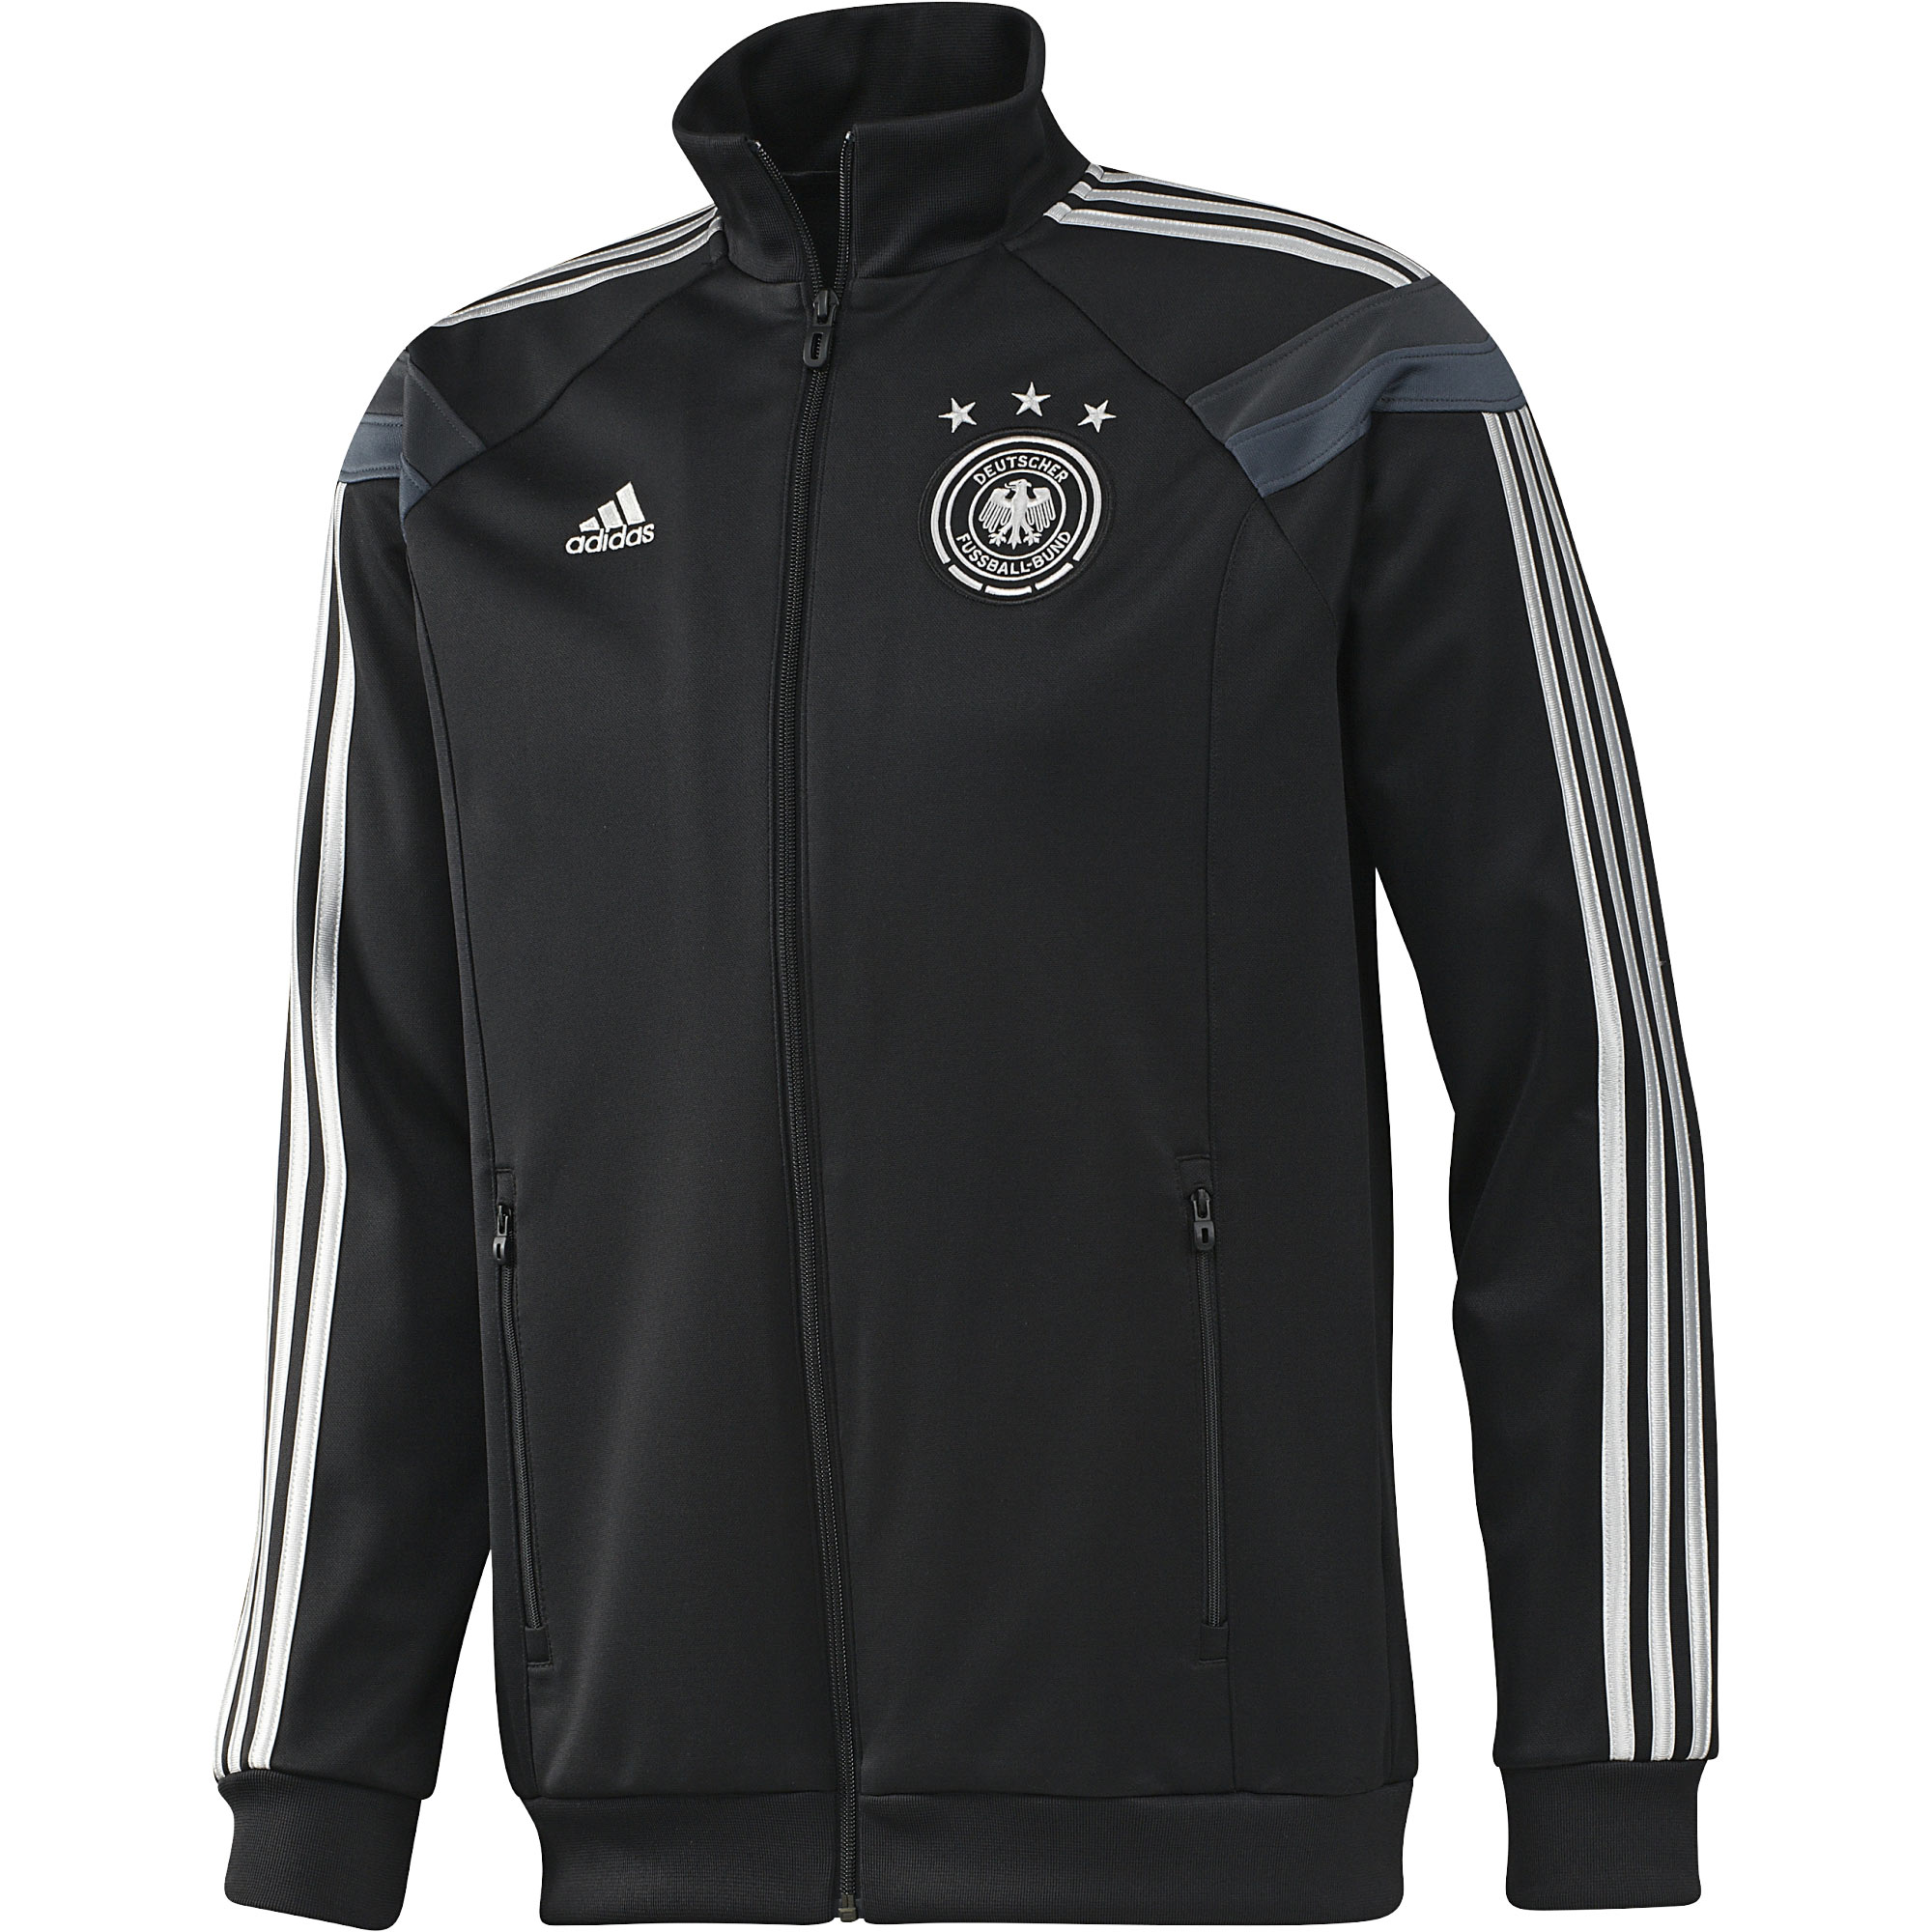 2014 Germany Black Training Jacket - Click Image to Close